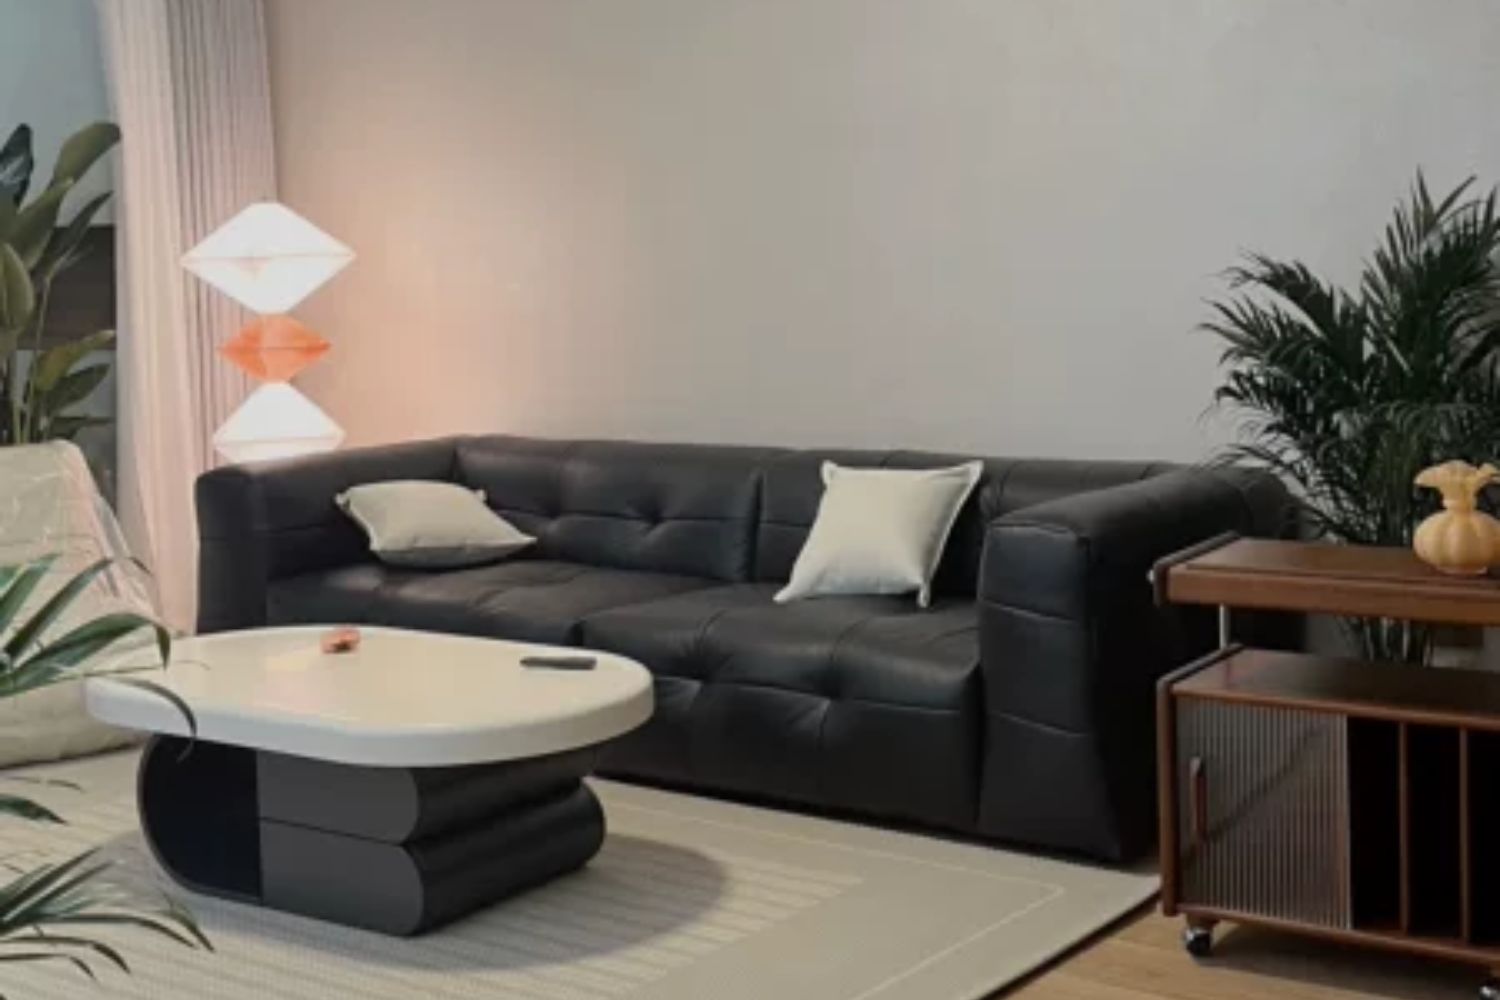 Cutey black leather sofa in customer's home